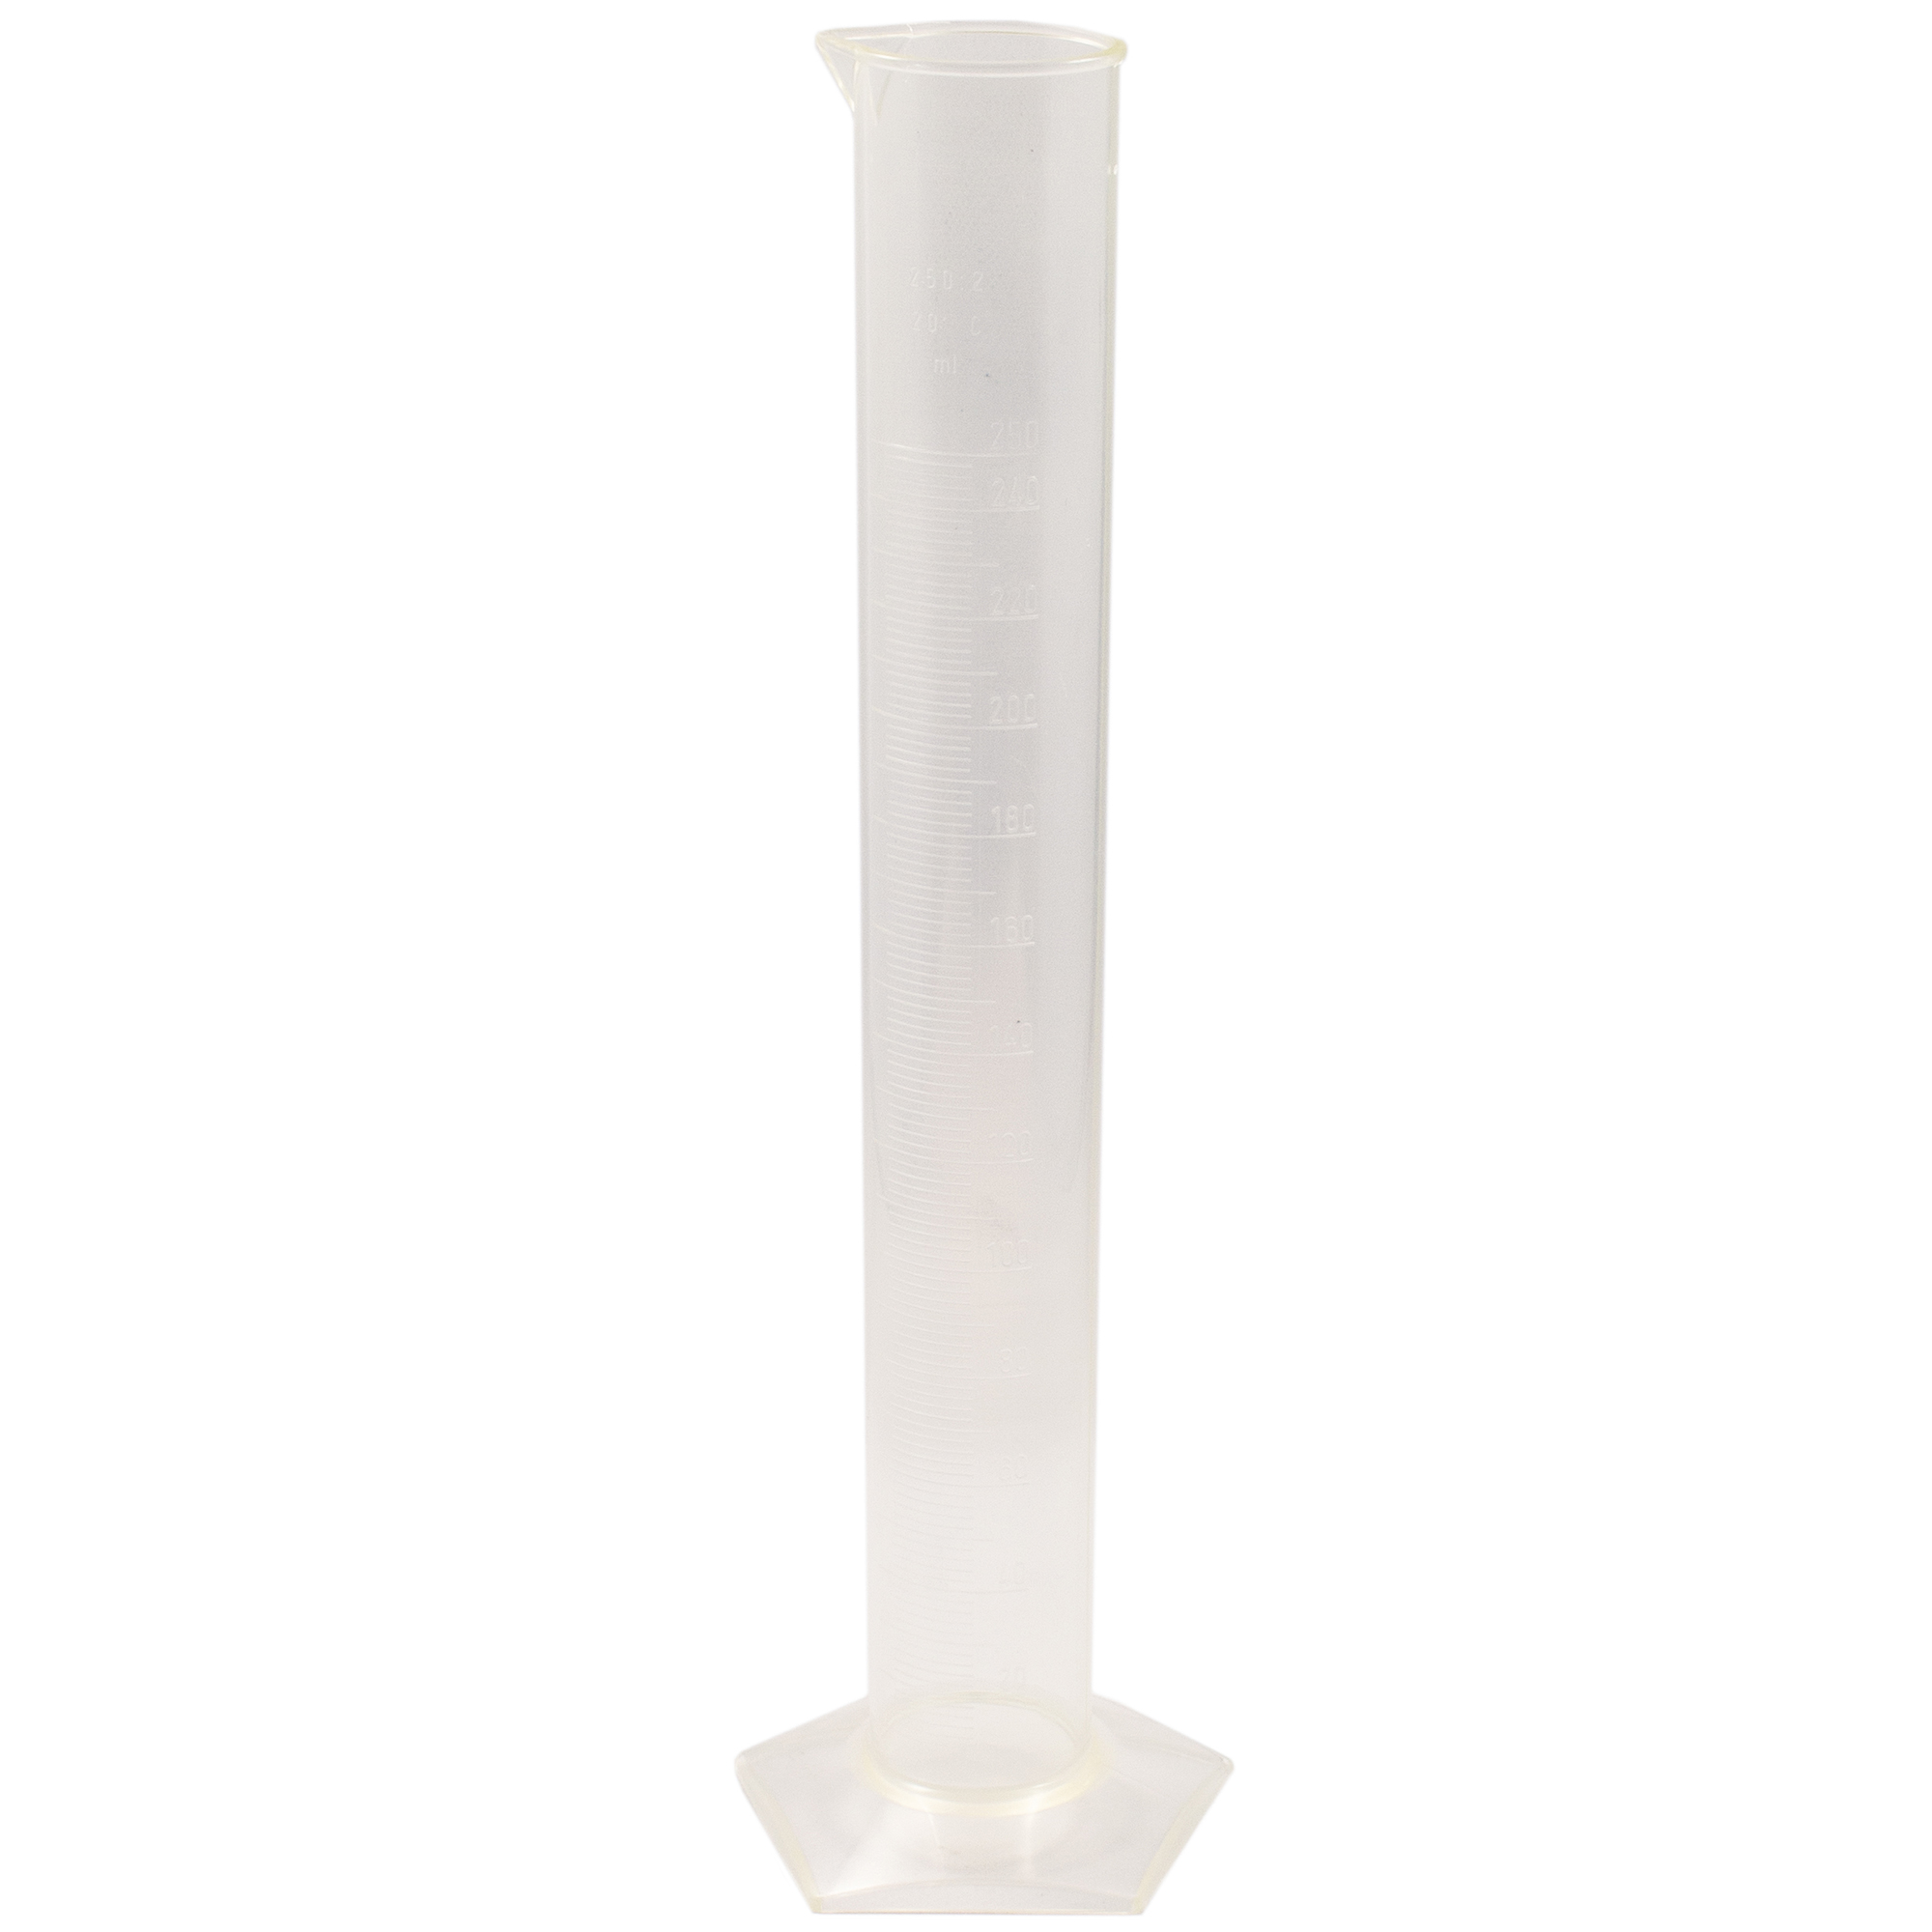 ABML 11388503 Measuring cylinder plastic (tpx) - 10ml